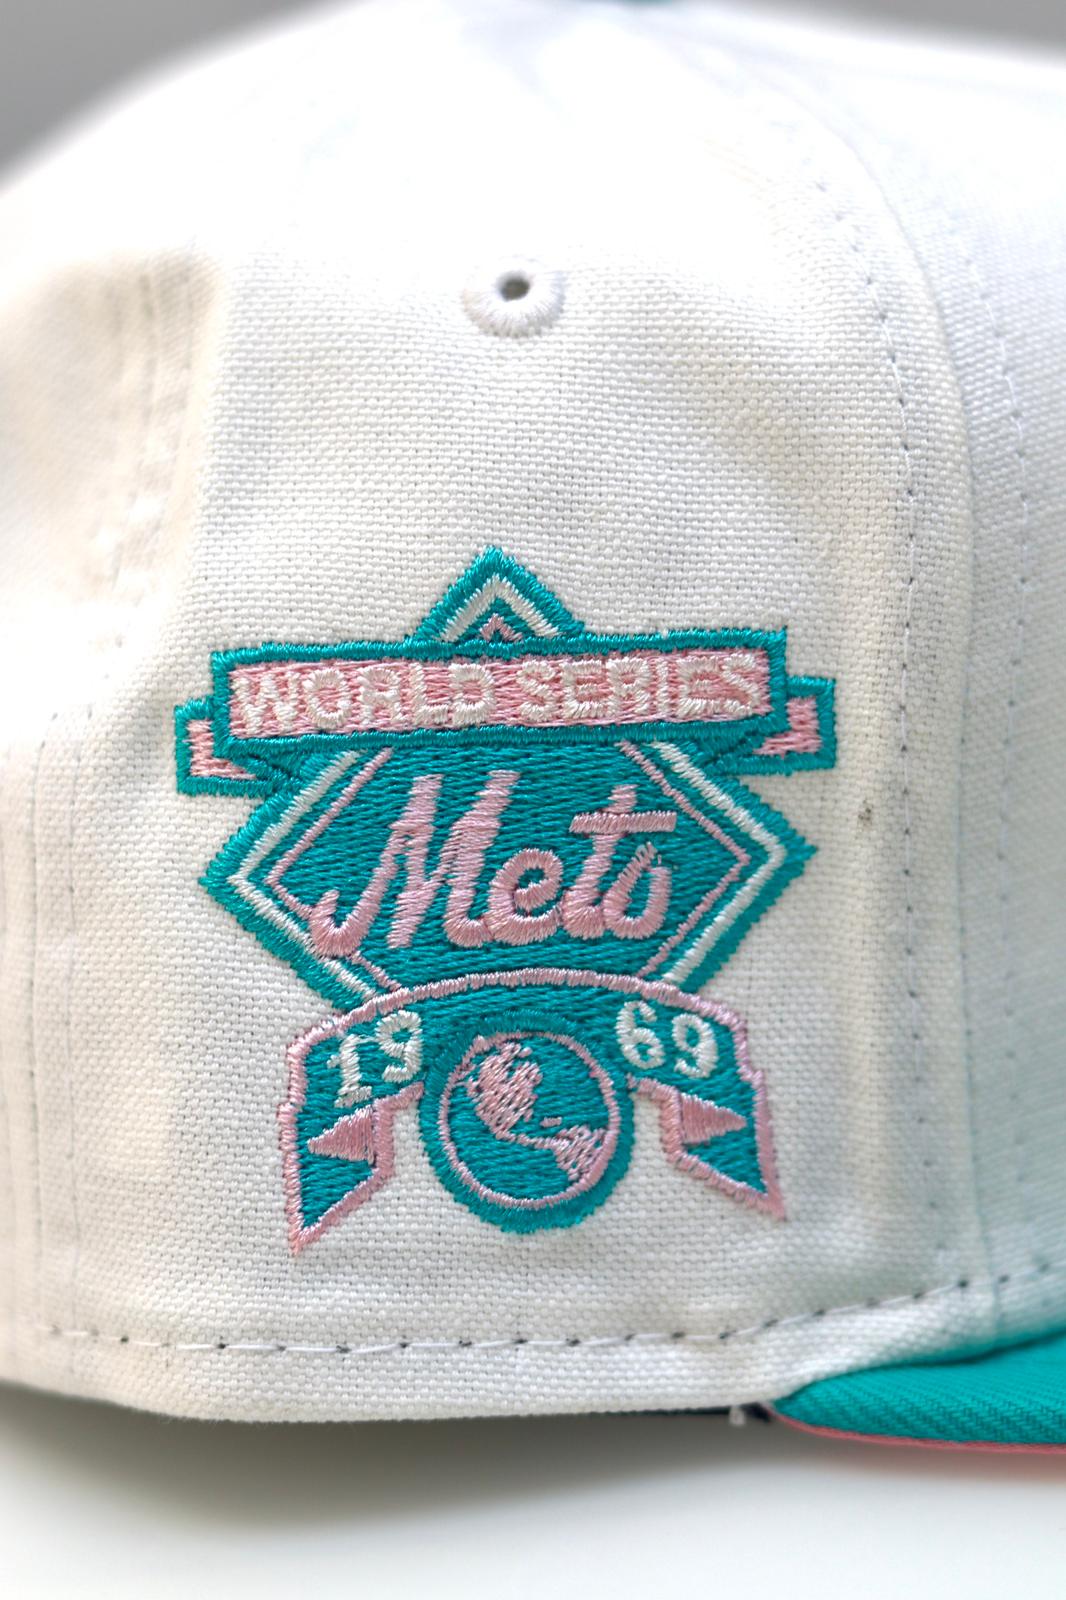 Two Tone New York Mets "HATCLUB" Exclusive Monaco Collection Pink Undervisor